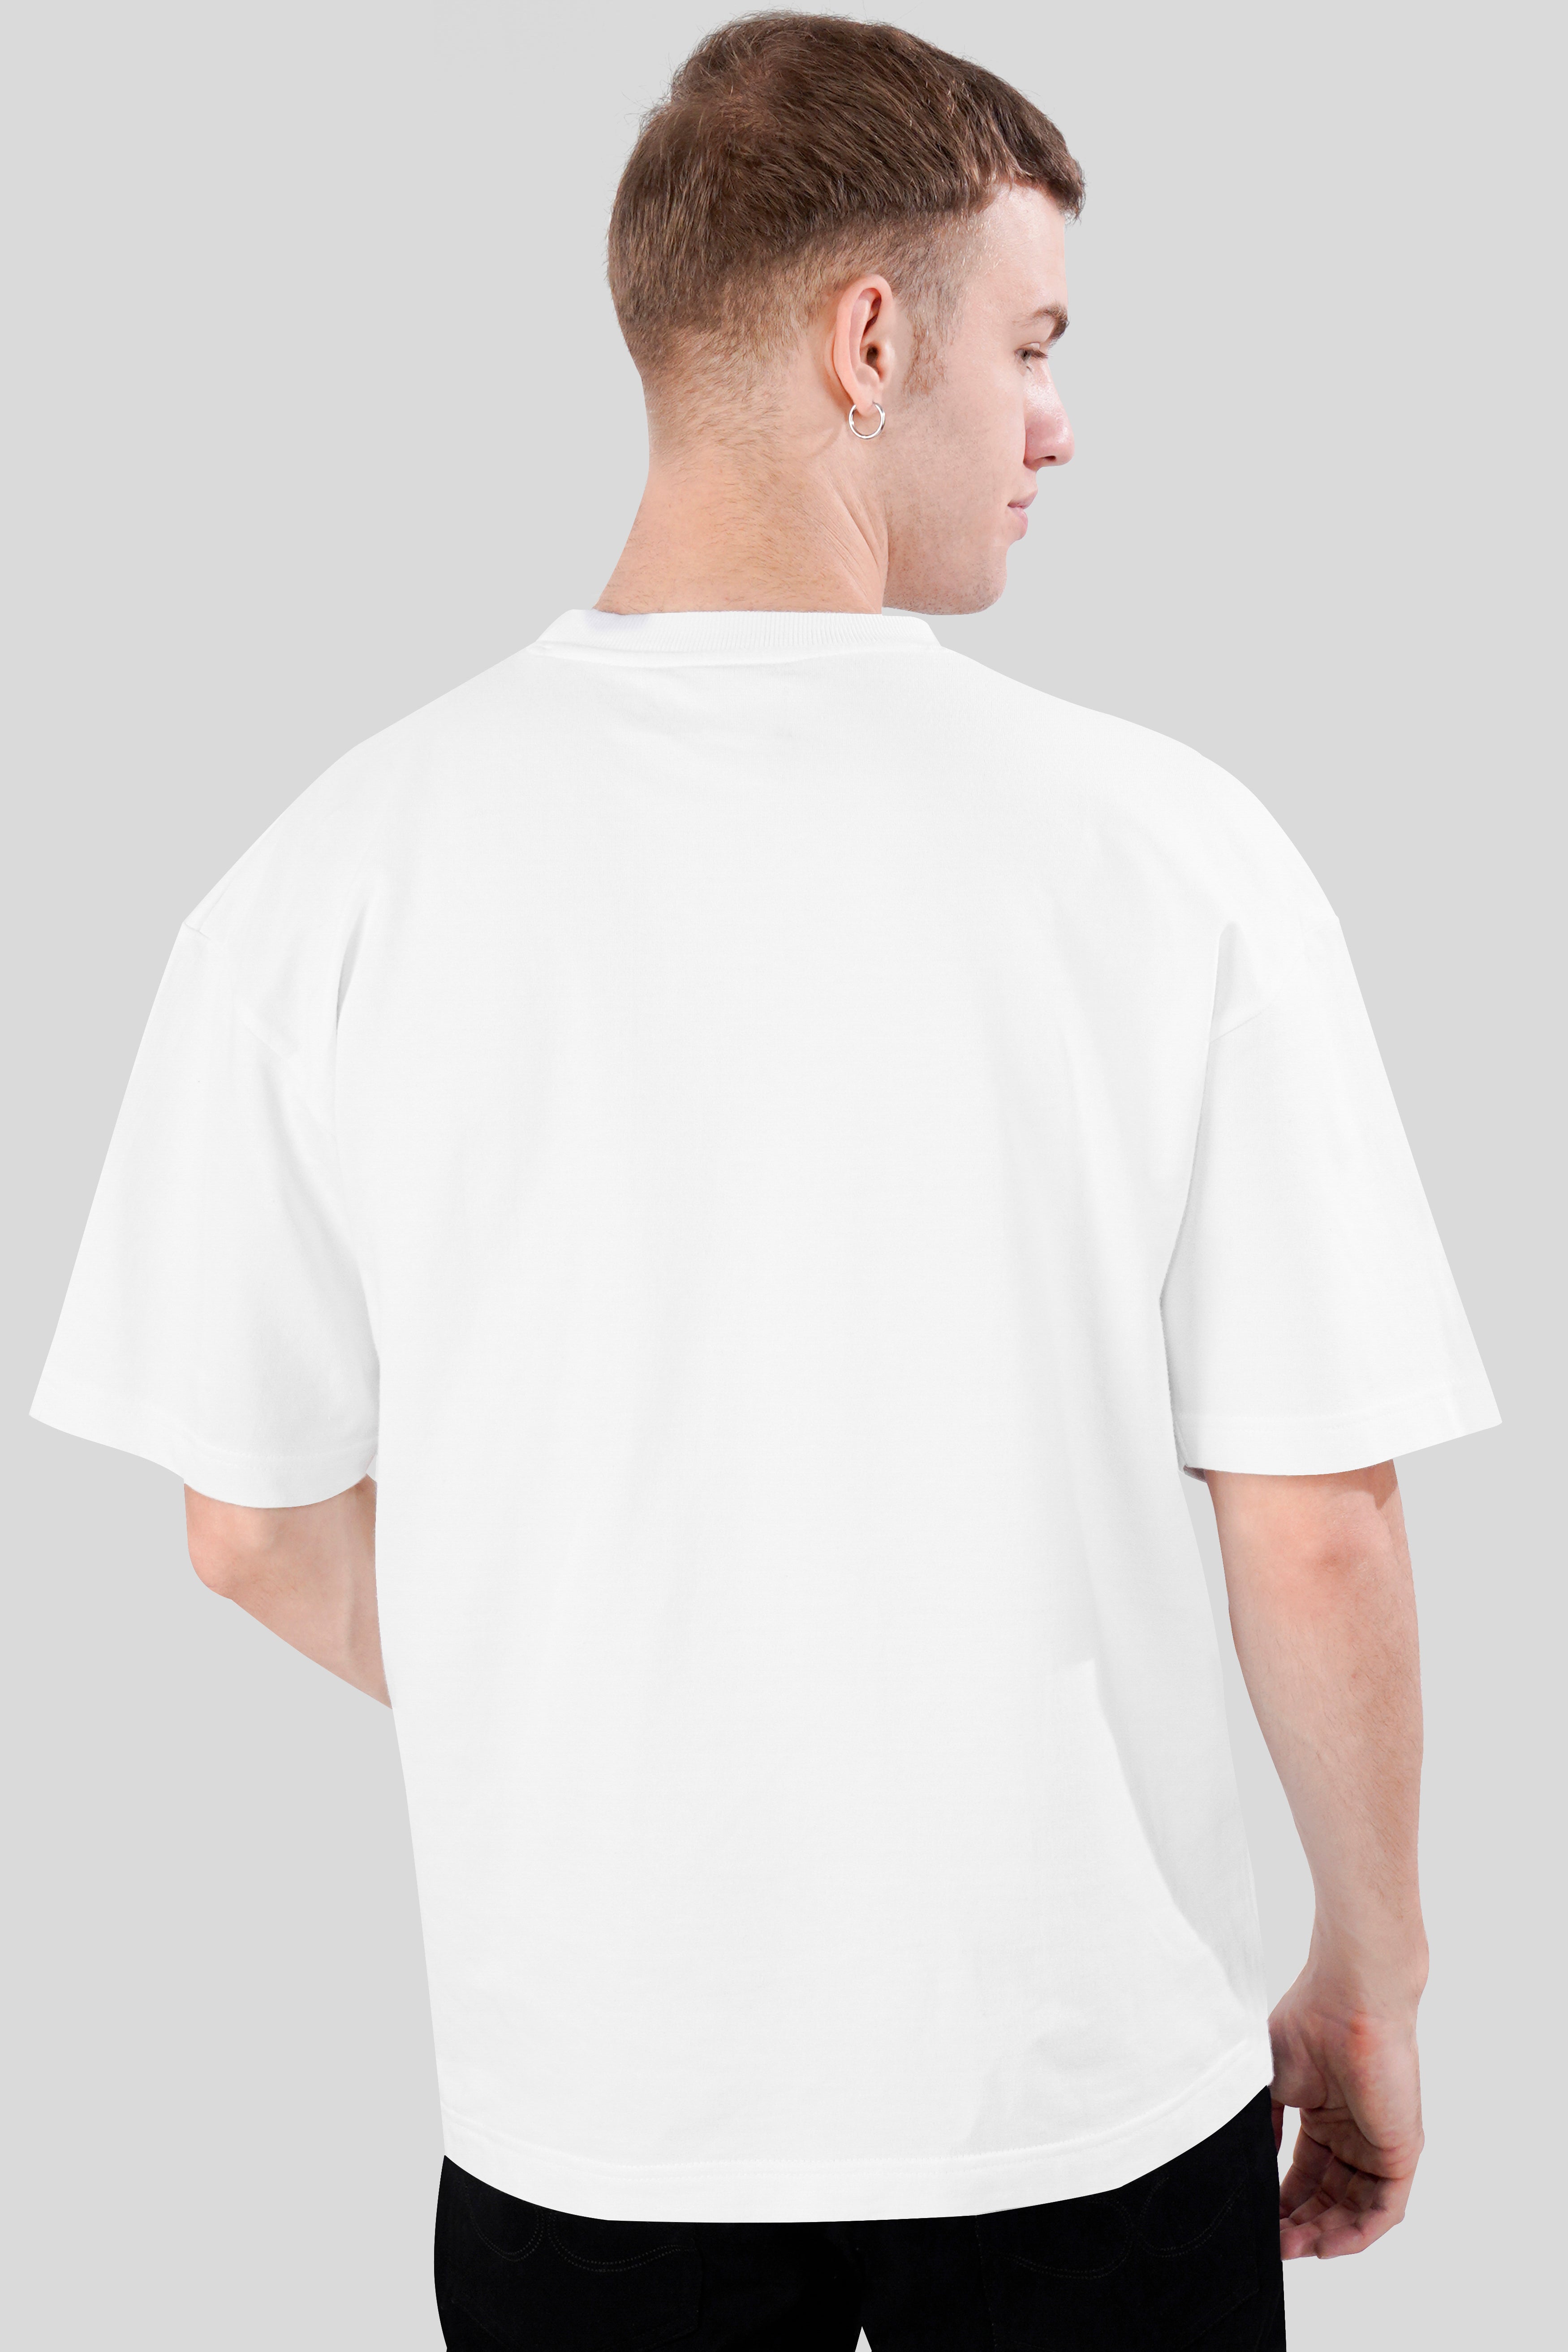 🚨 5/$10 Faded Glory Women's Size Large Bright White T Shirt, V